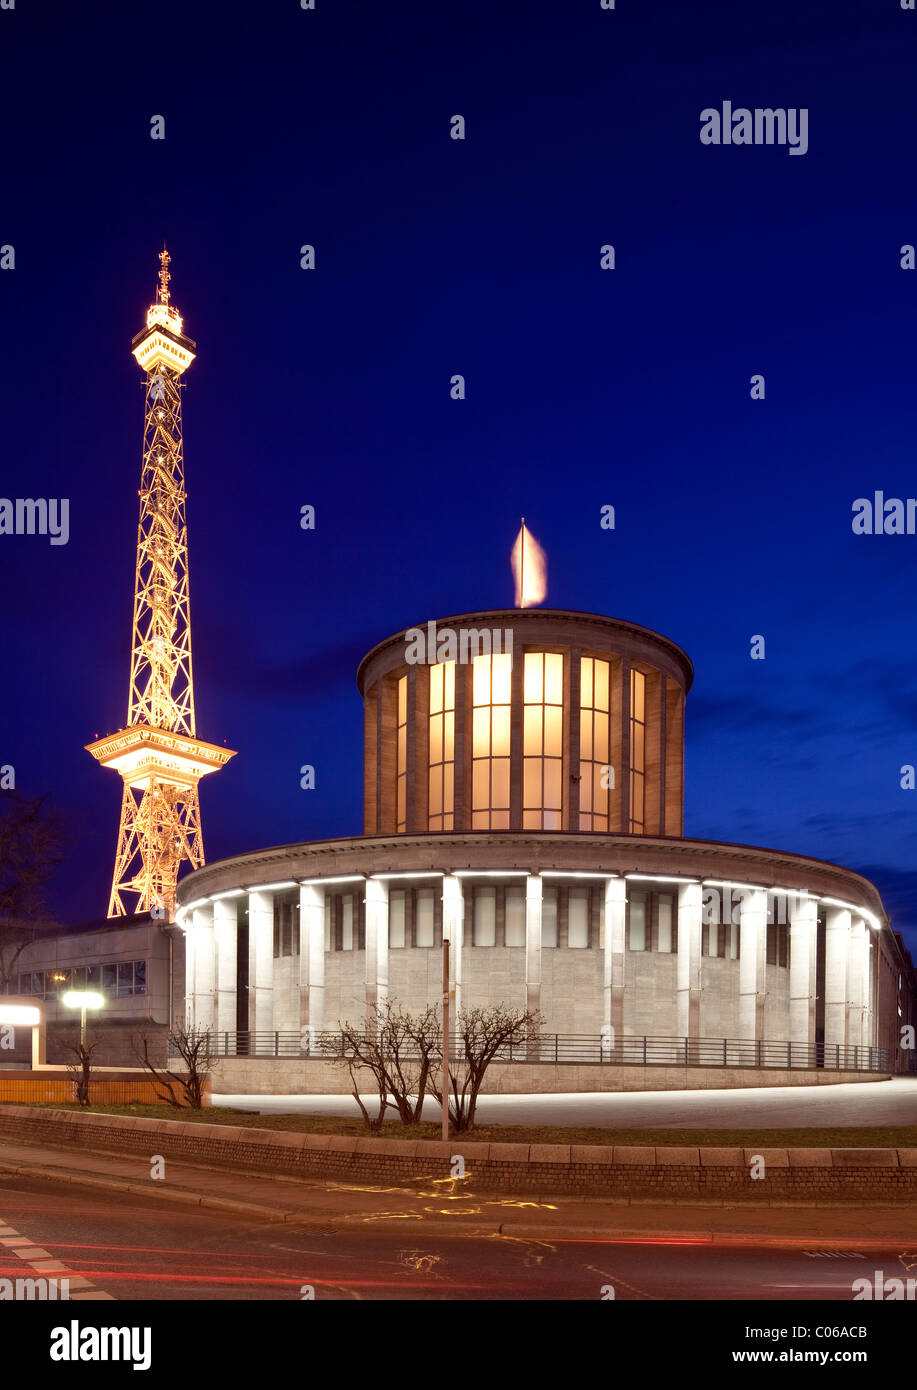 Messe Berlin fairgrounds with Funkturm radio tower, Charlottenburg, Berlin, Germany, Europe Stock Photo